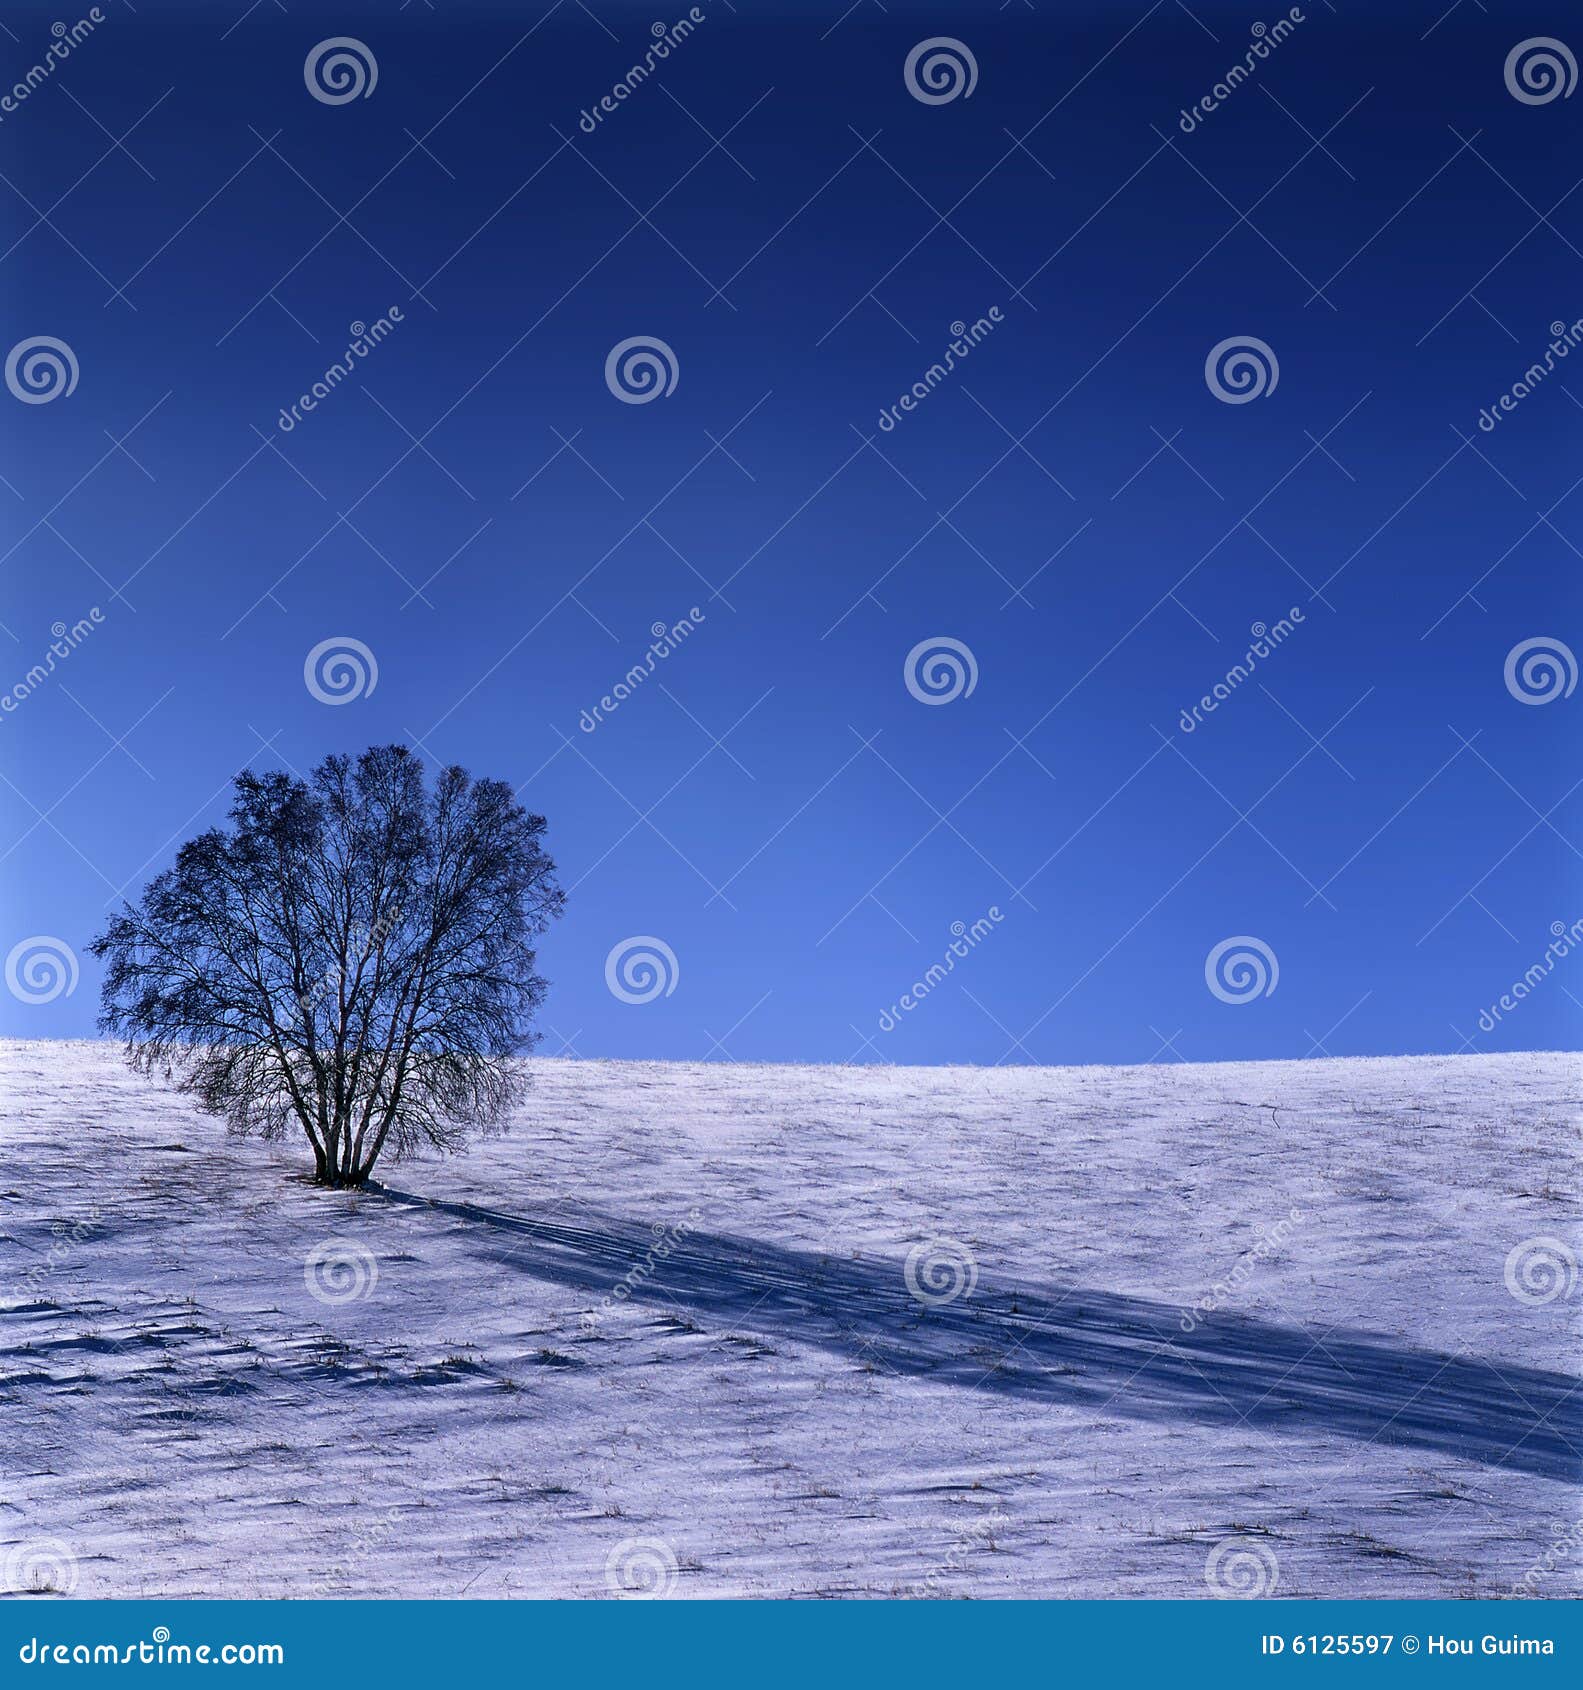 winter grassland scenery